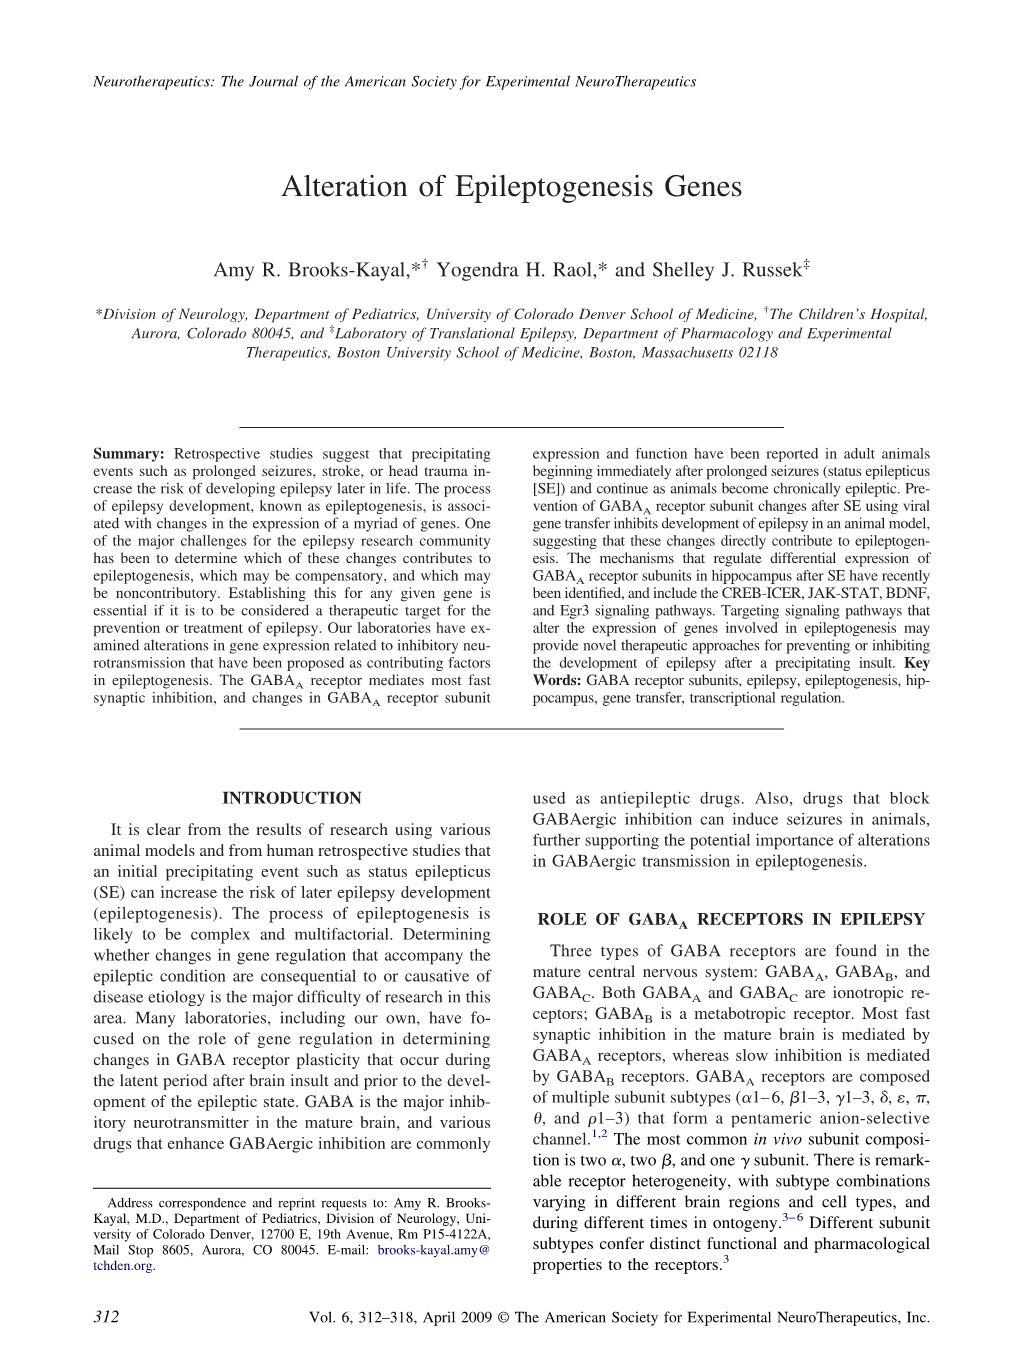 Alteration of Epileptogenesis Genes